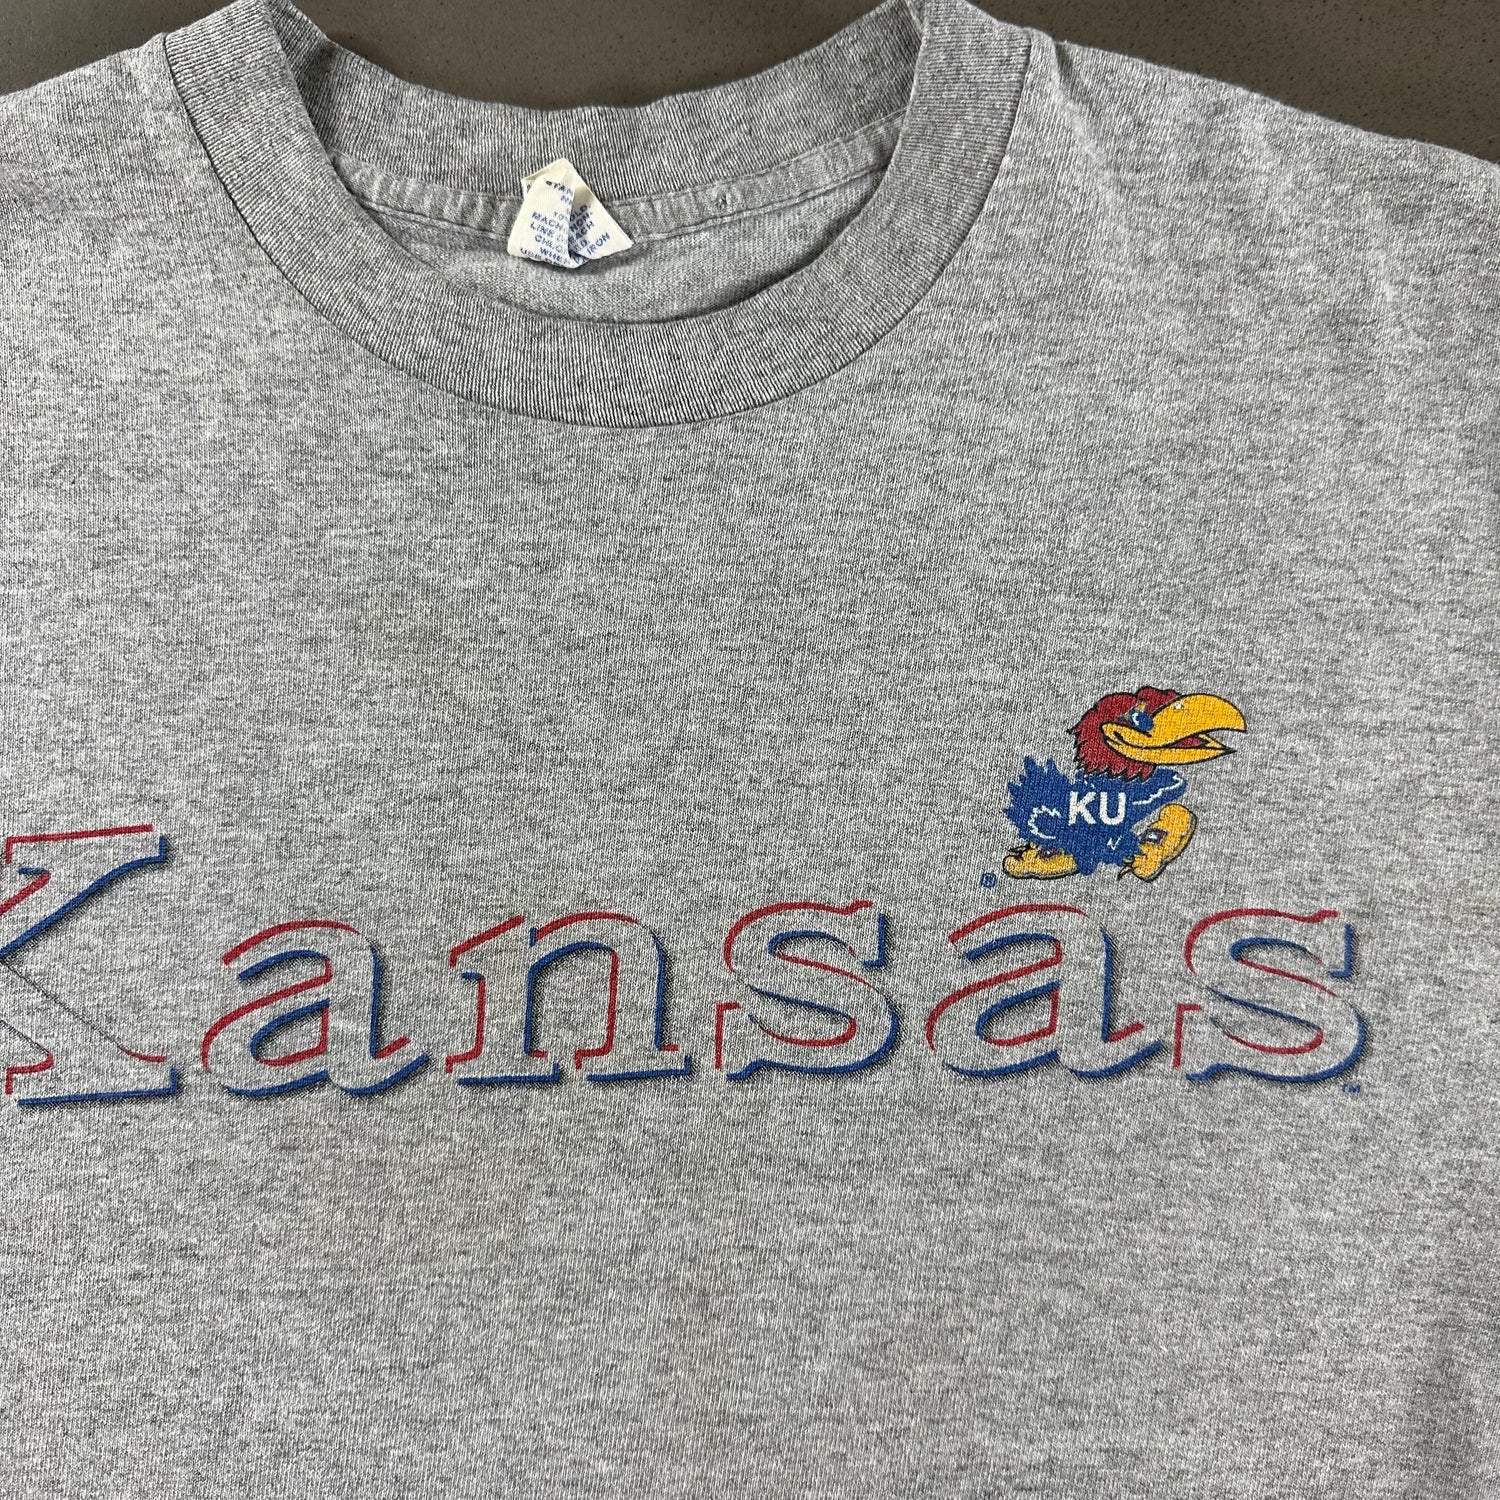 Vintage 1990s Kansas University T-shirt size Medium